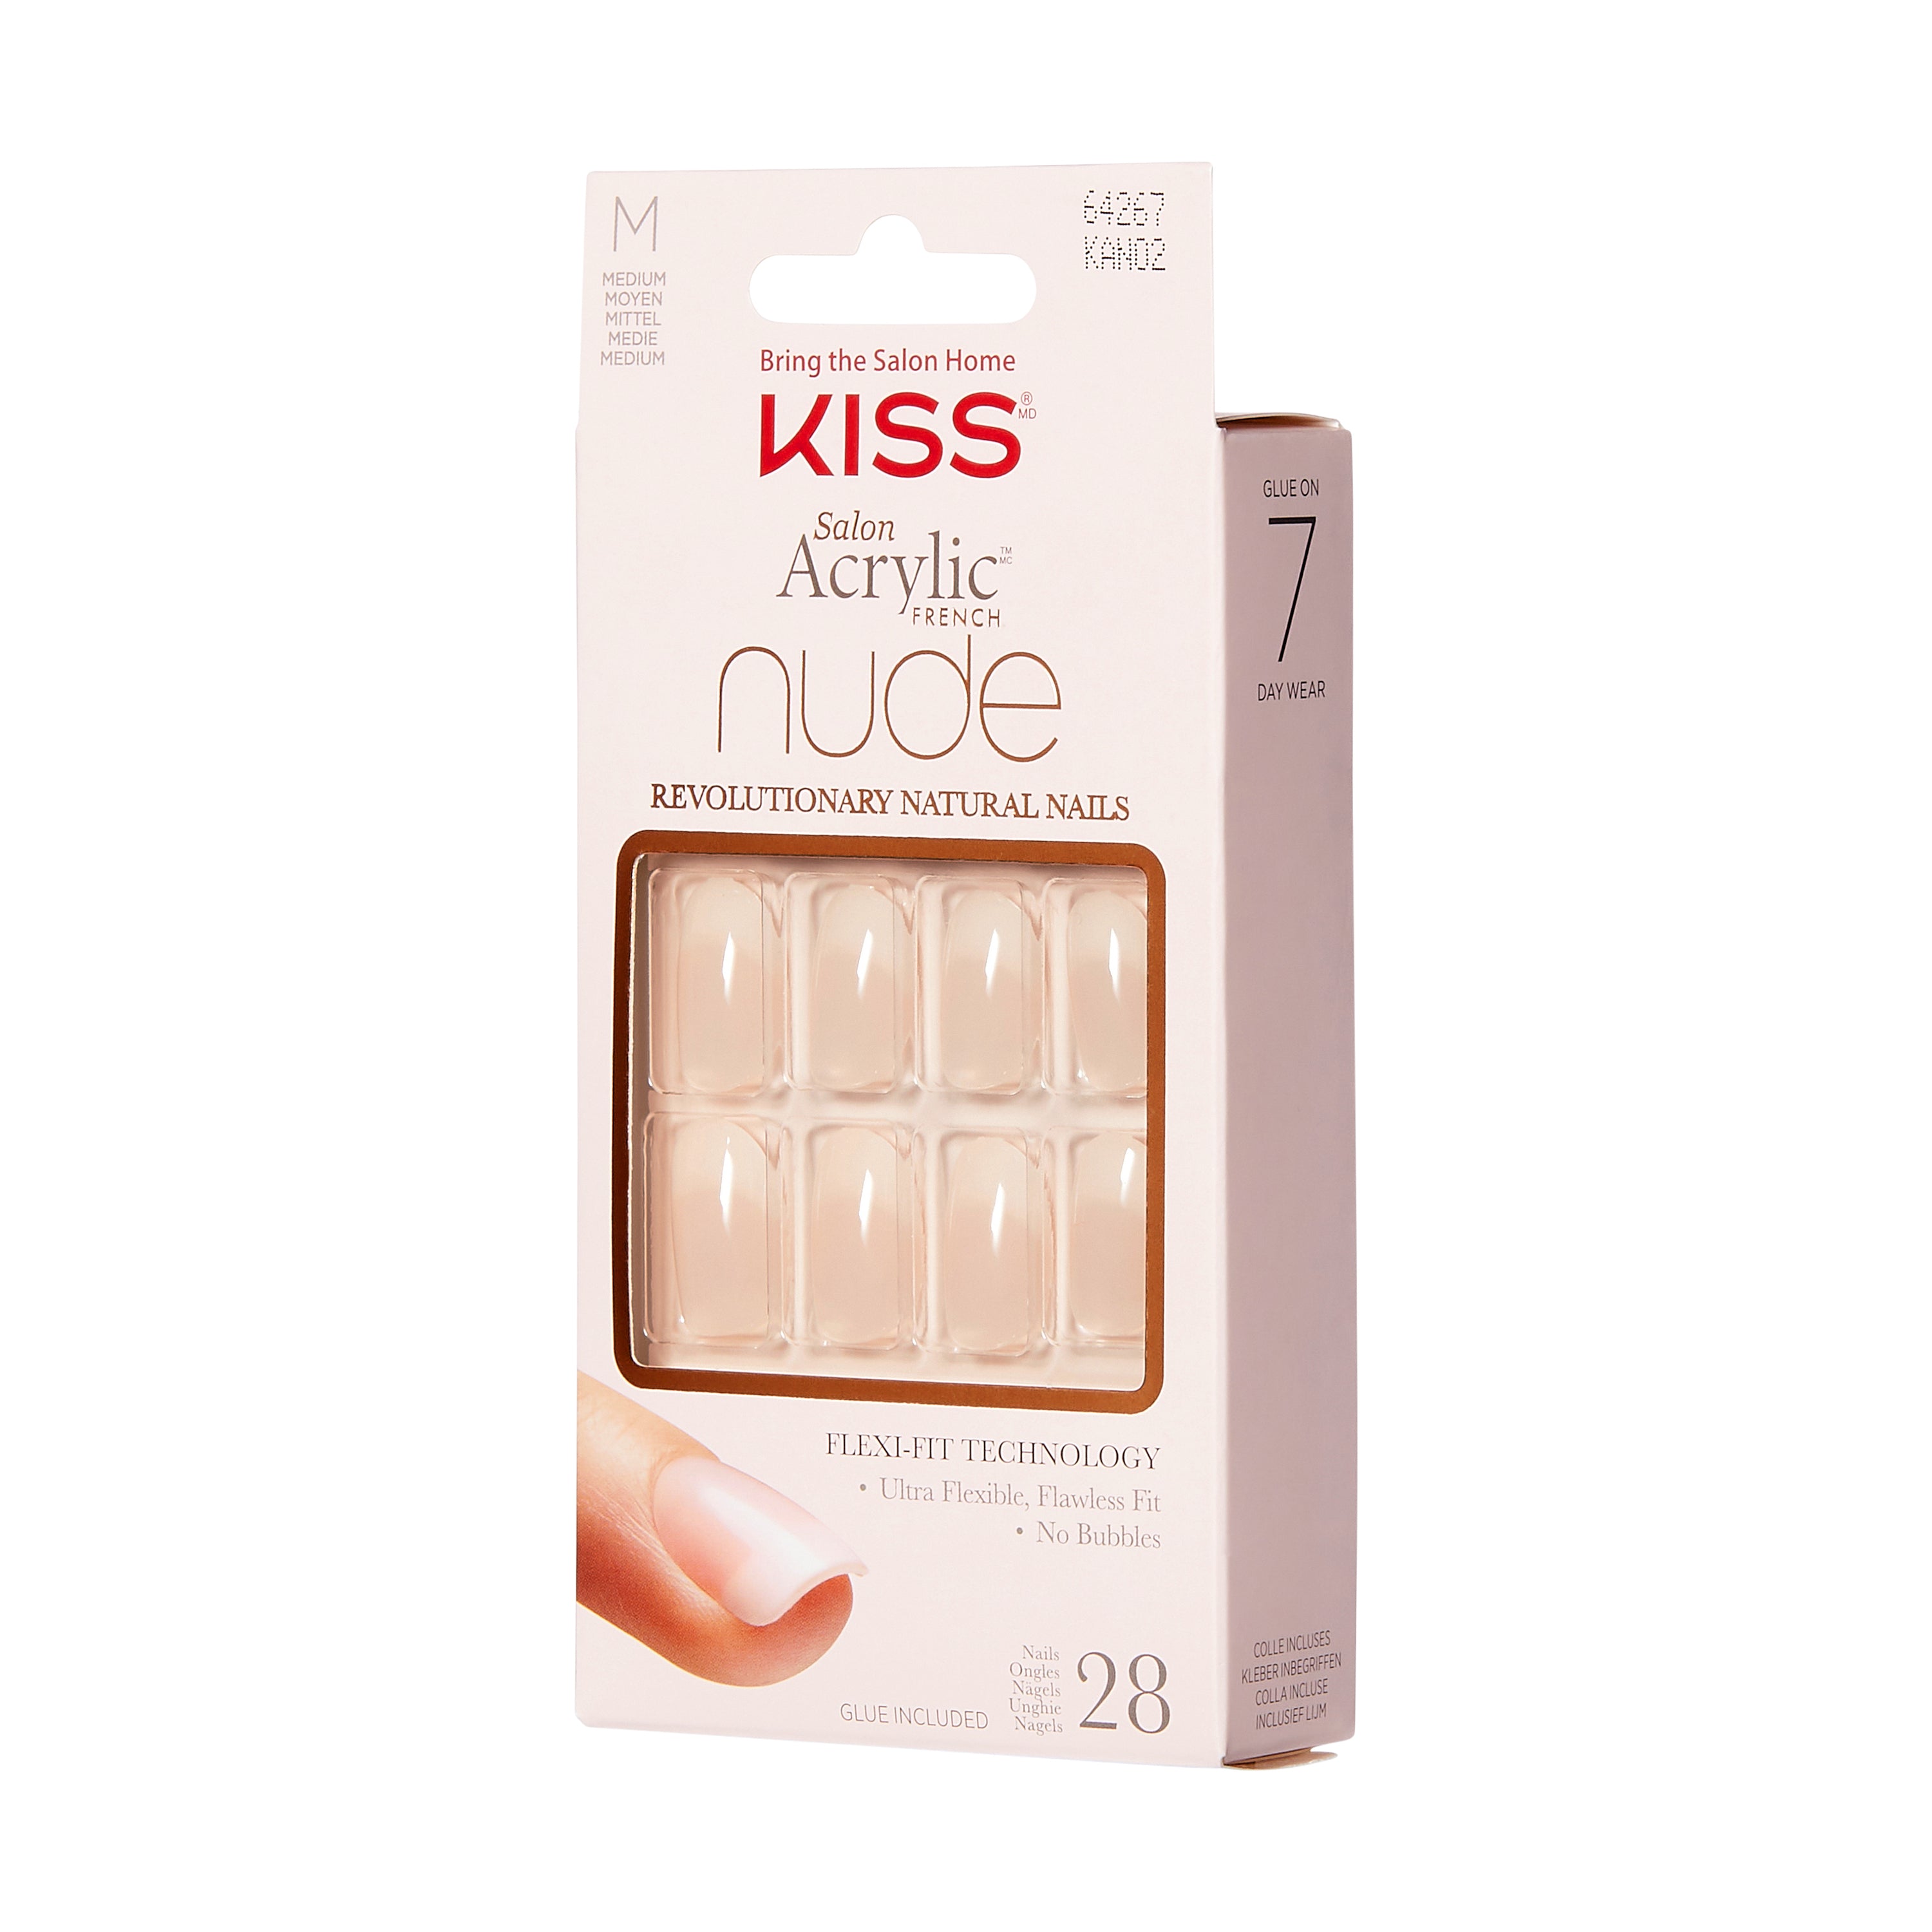 KISS Salon Acrylic Nude French Nails - Graceful